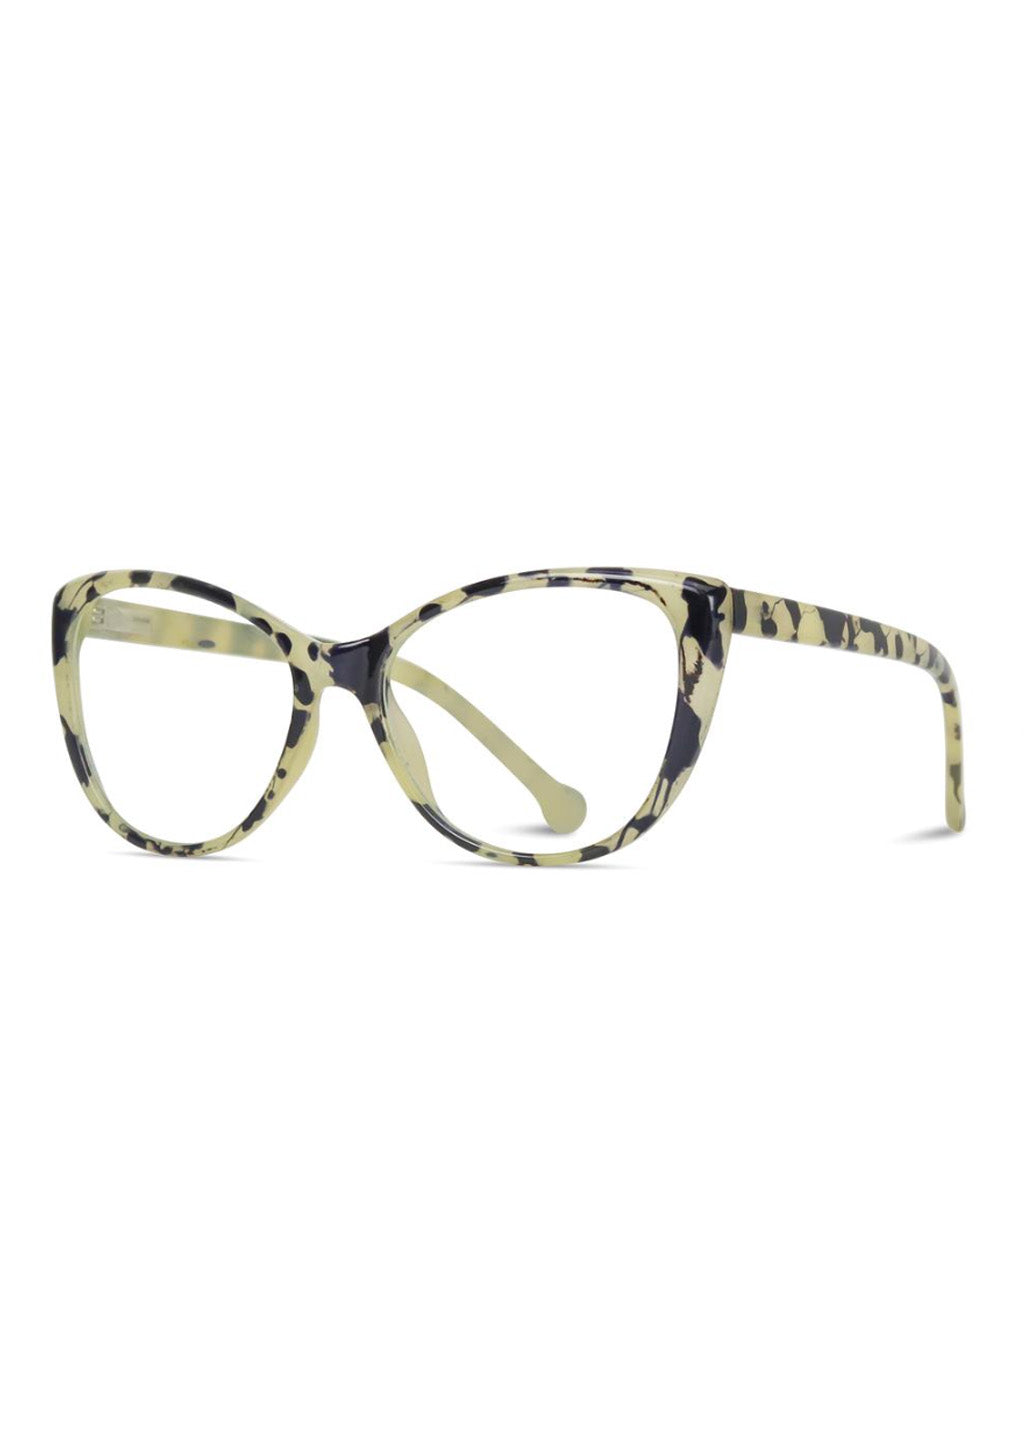 Cream Tortoise Frame Blue Light Glasses - FINAL SALE Accessories